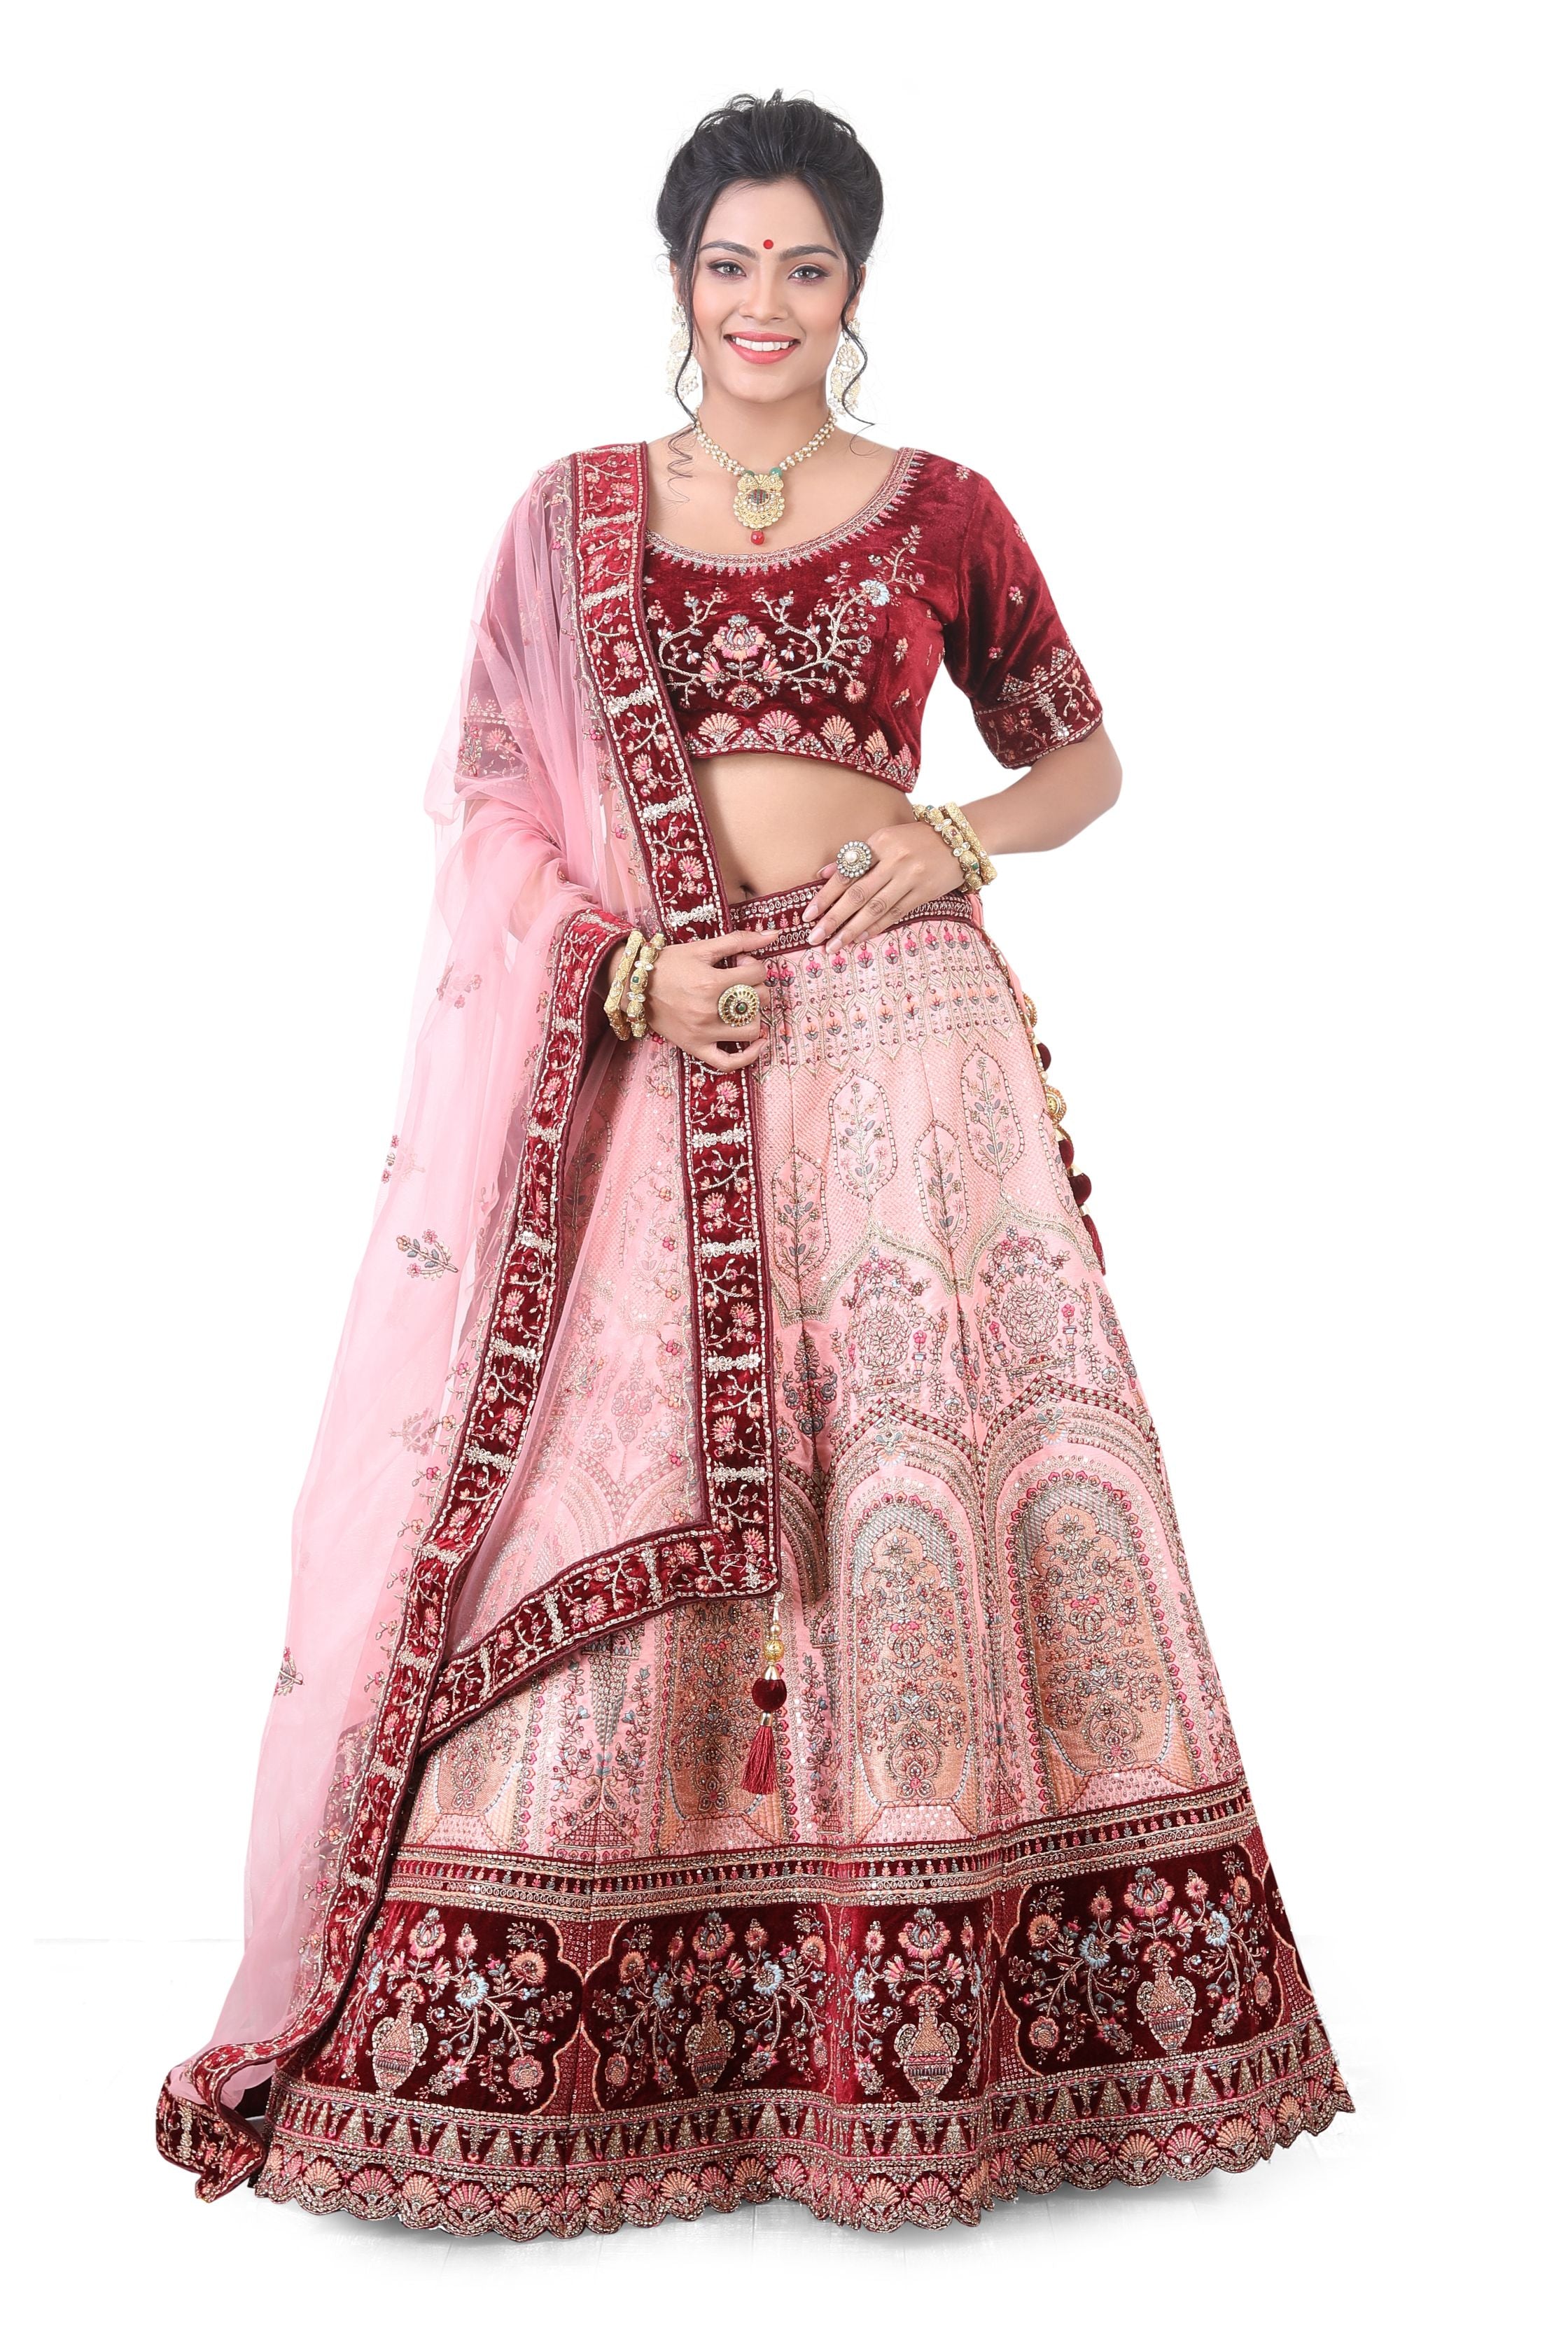 Pink Bridal Lehenga Choli - Premium Partywear Lehenga from Dulhan Exclusives - Just $985! Shop now at Dulhan Exclusives